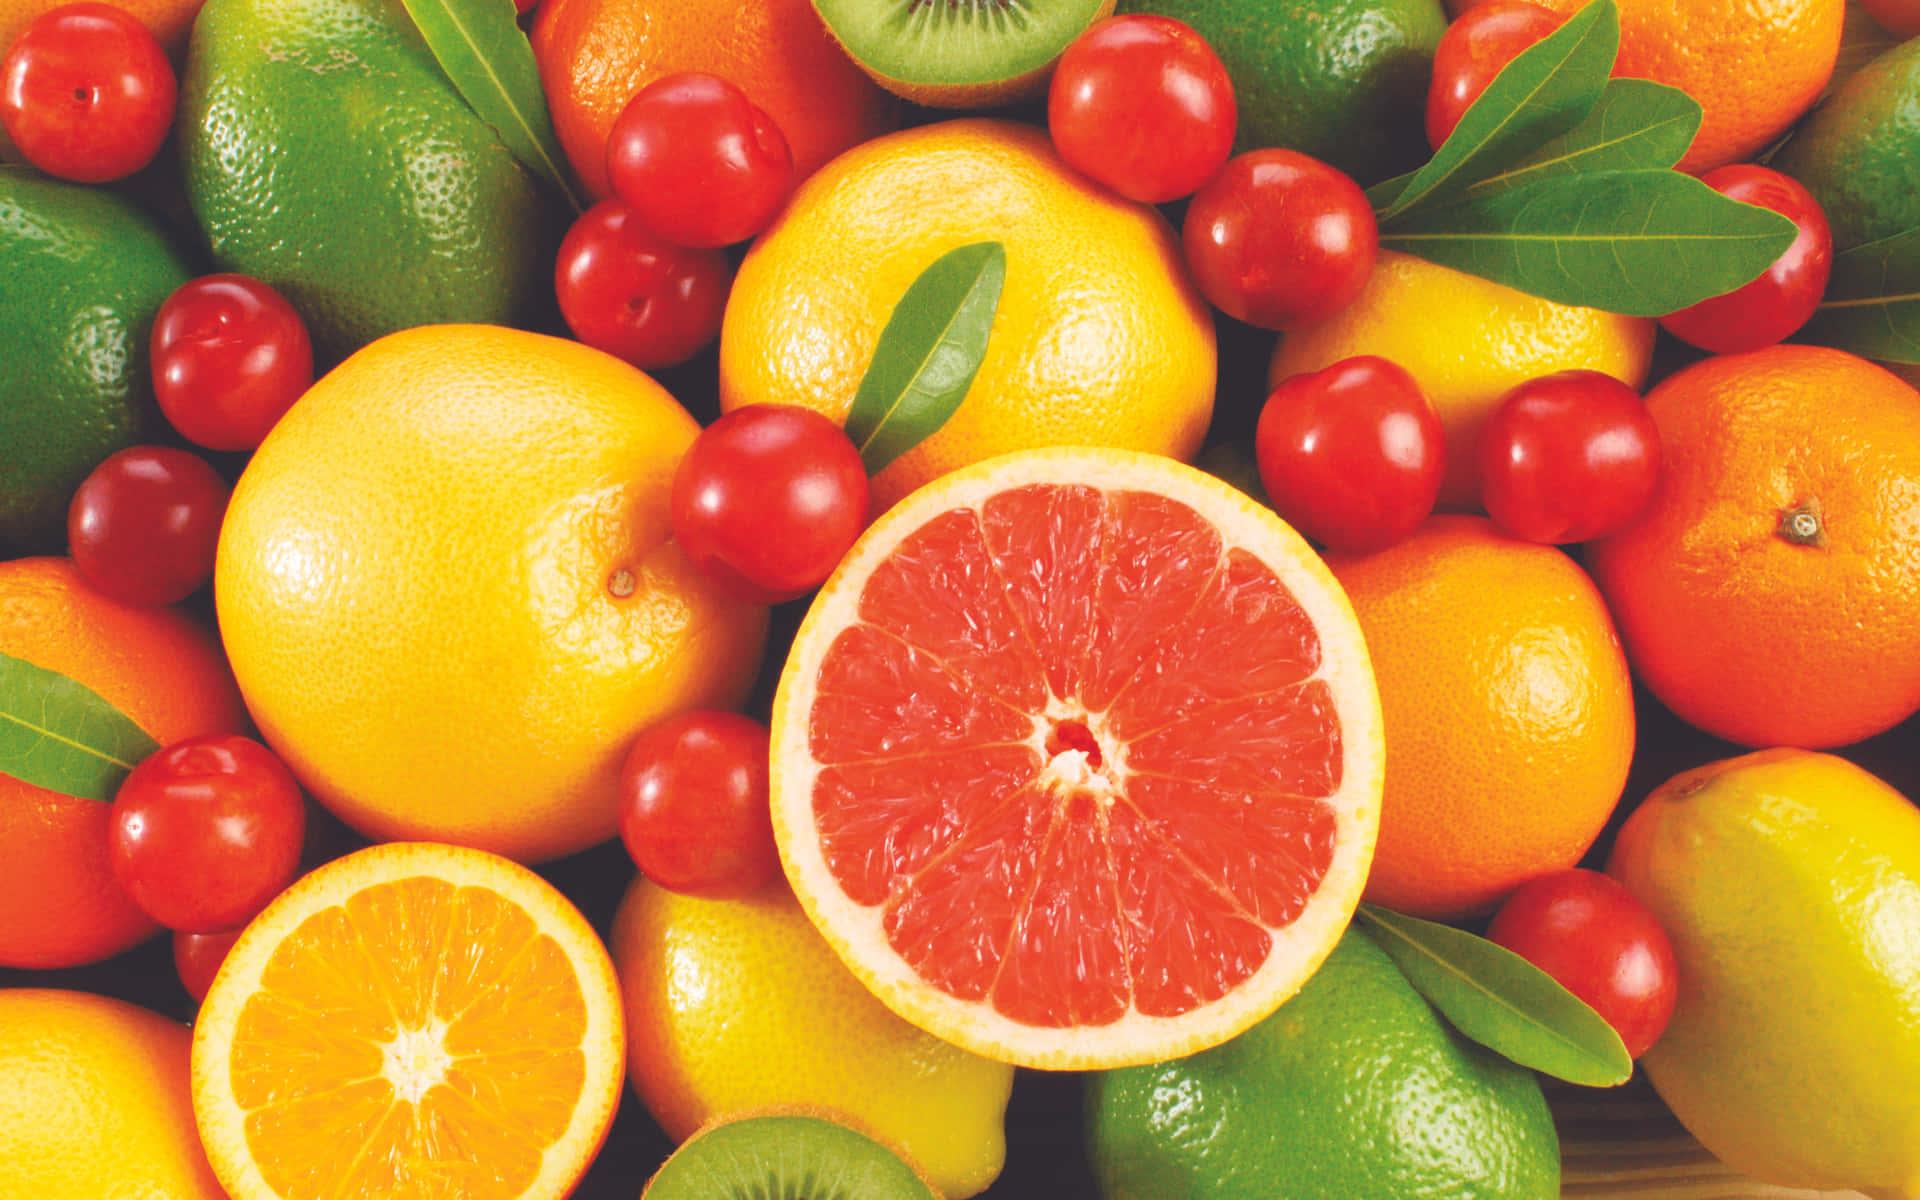 A basket of vibrant fresh fruits